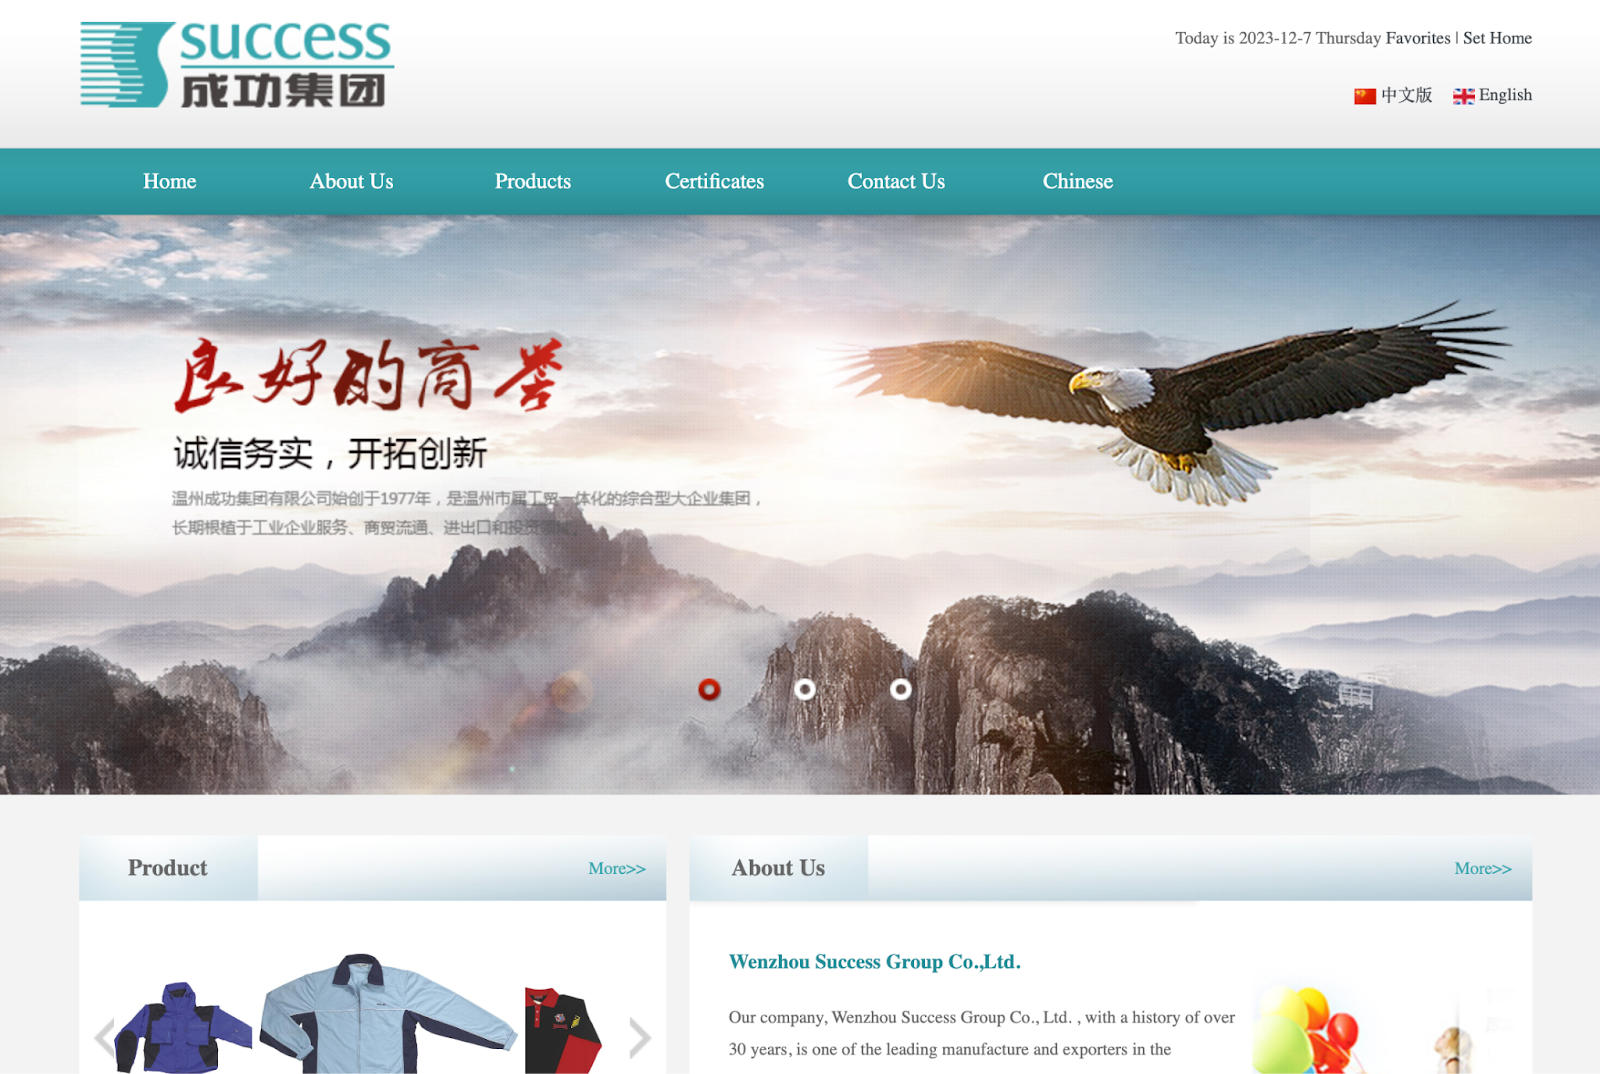 Wenzhou Success Group Co., Ltd.